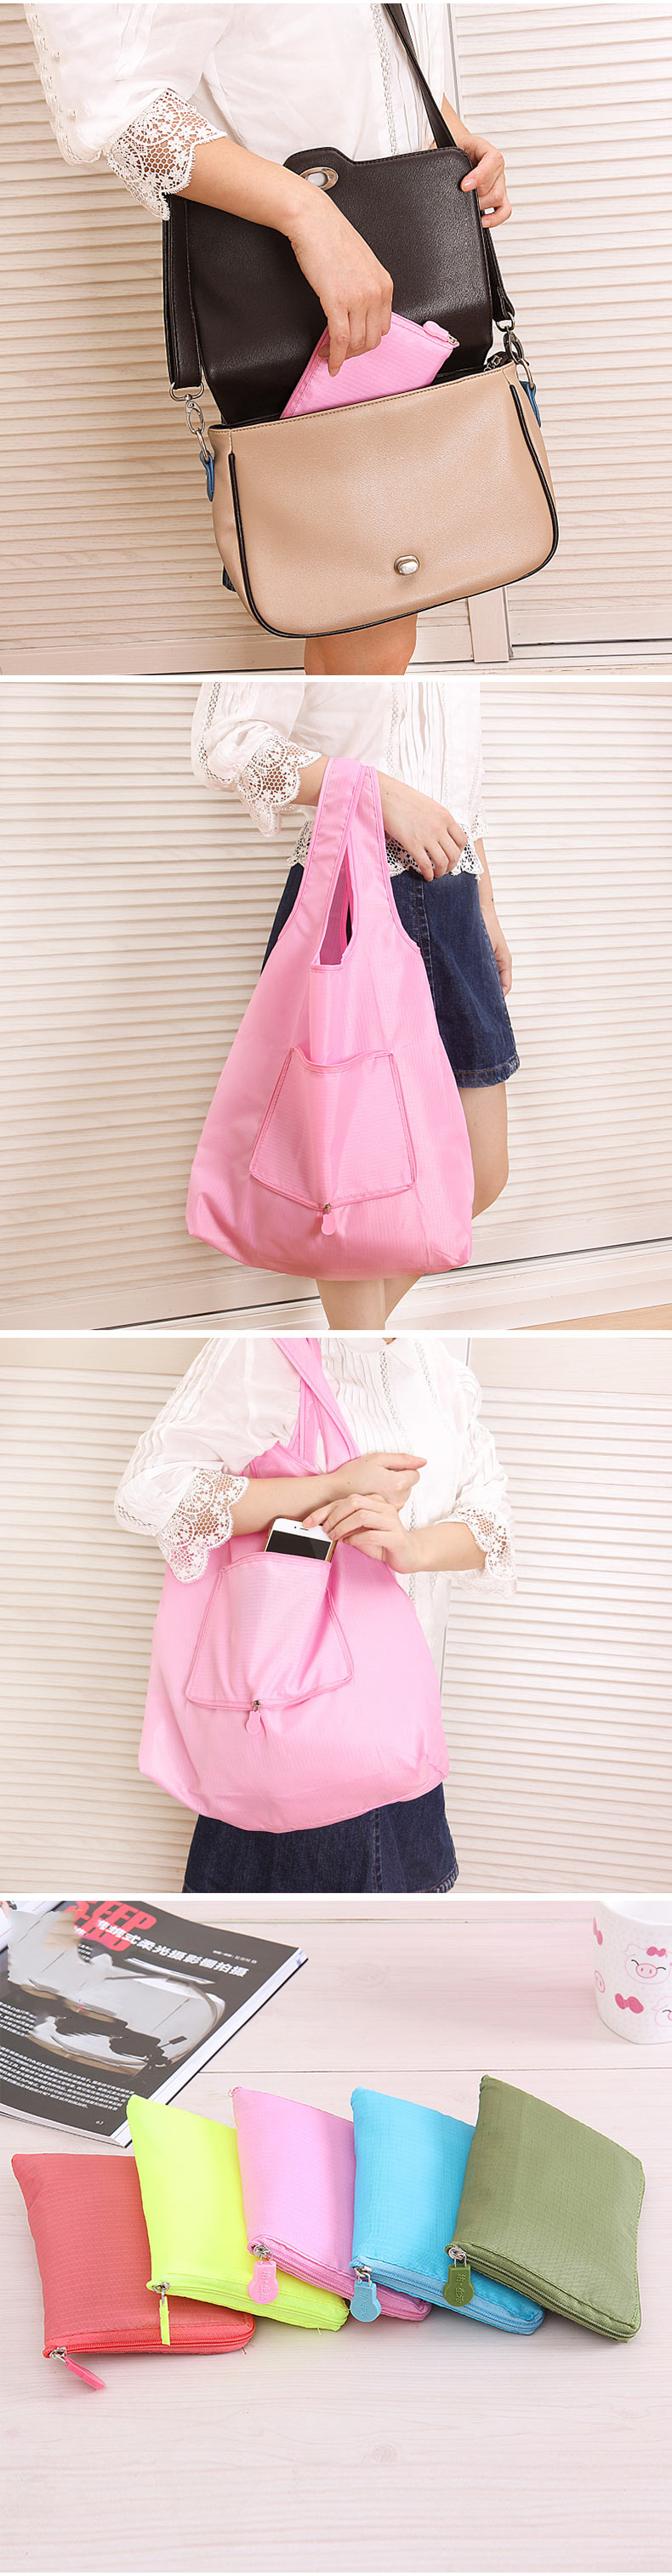 Honana-HN-B45-Foldable-Shopping-Storage-Bag-Waterproof-Portable-Travel-Grocery-Bag-1159754-1